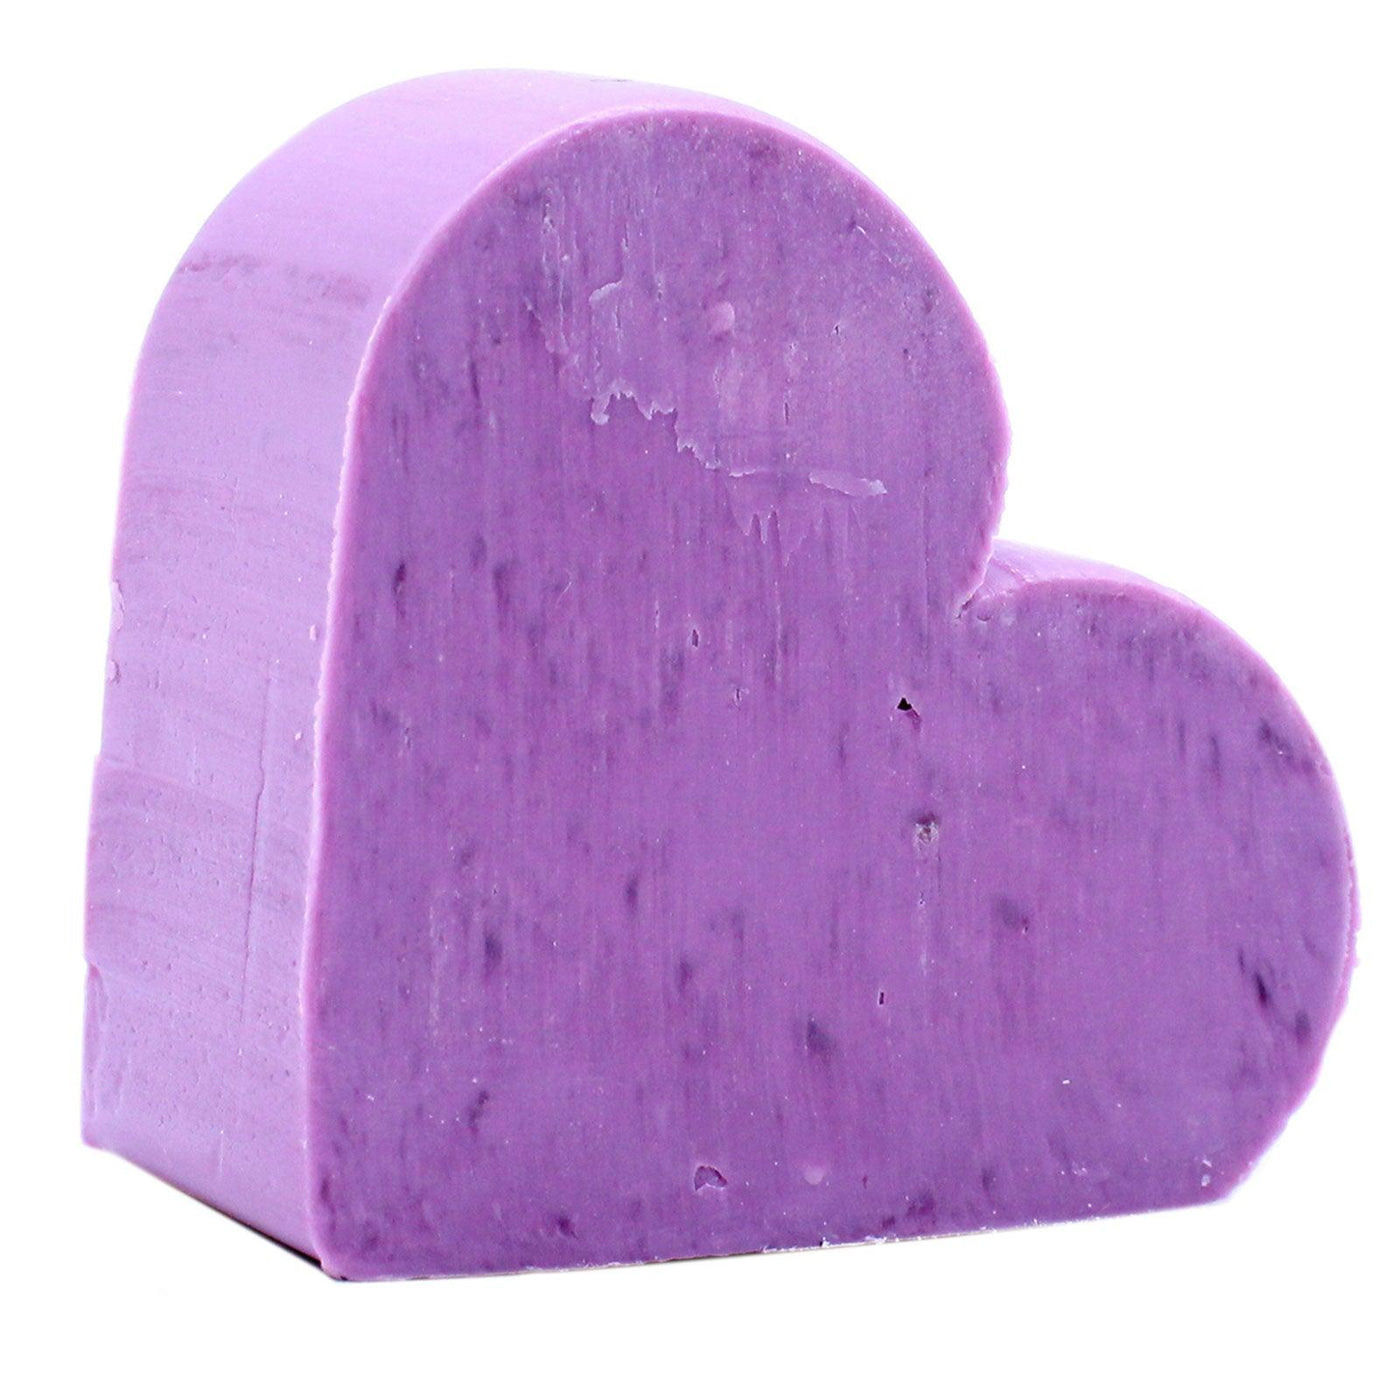 10x Lilac Heart Shaped Paraben Free Guest Soap - Lavender.